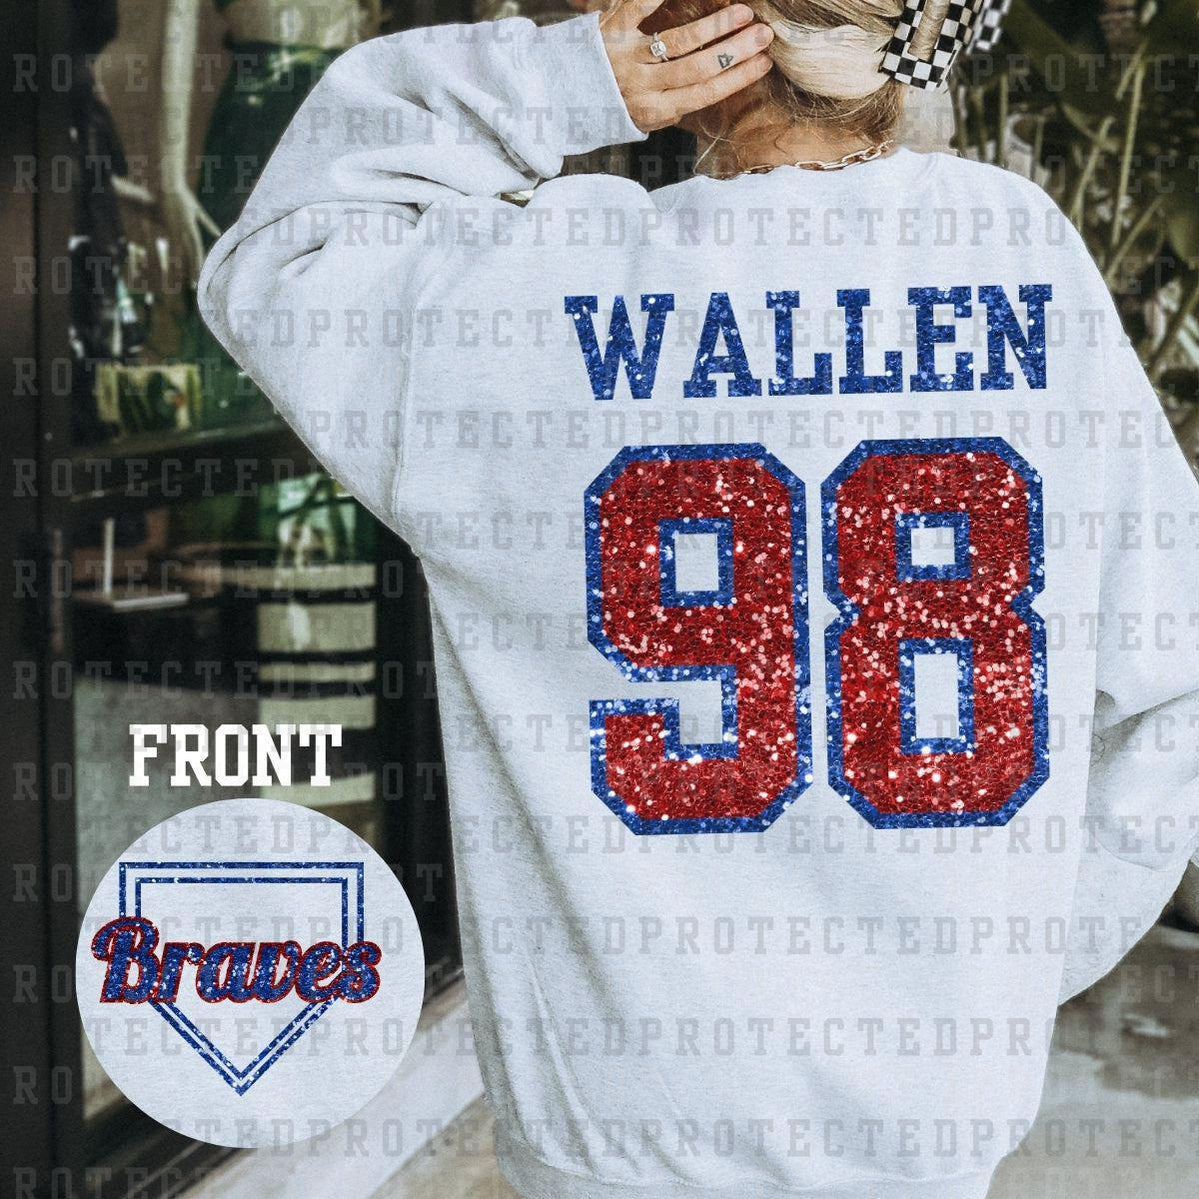 Morgan Wallen 98 Braves Shirt For Mens Womens Best 98 Braves